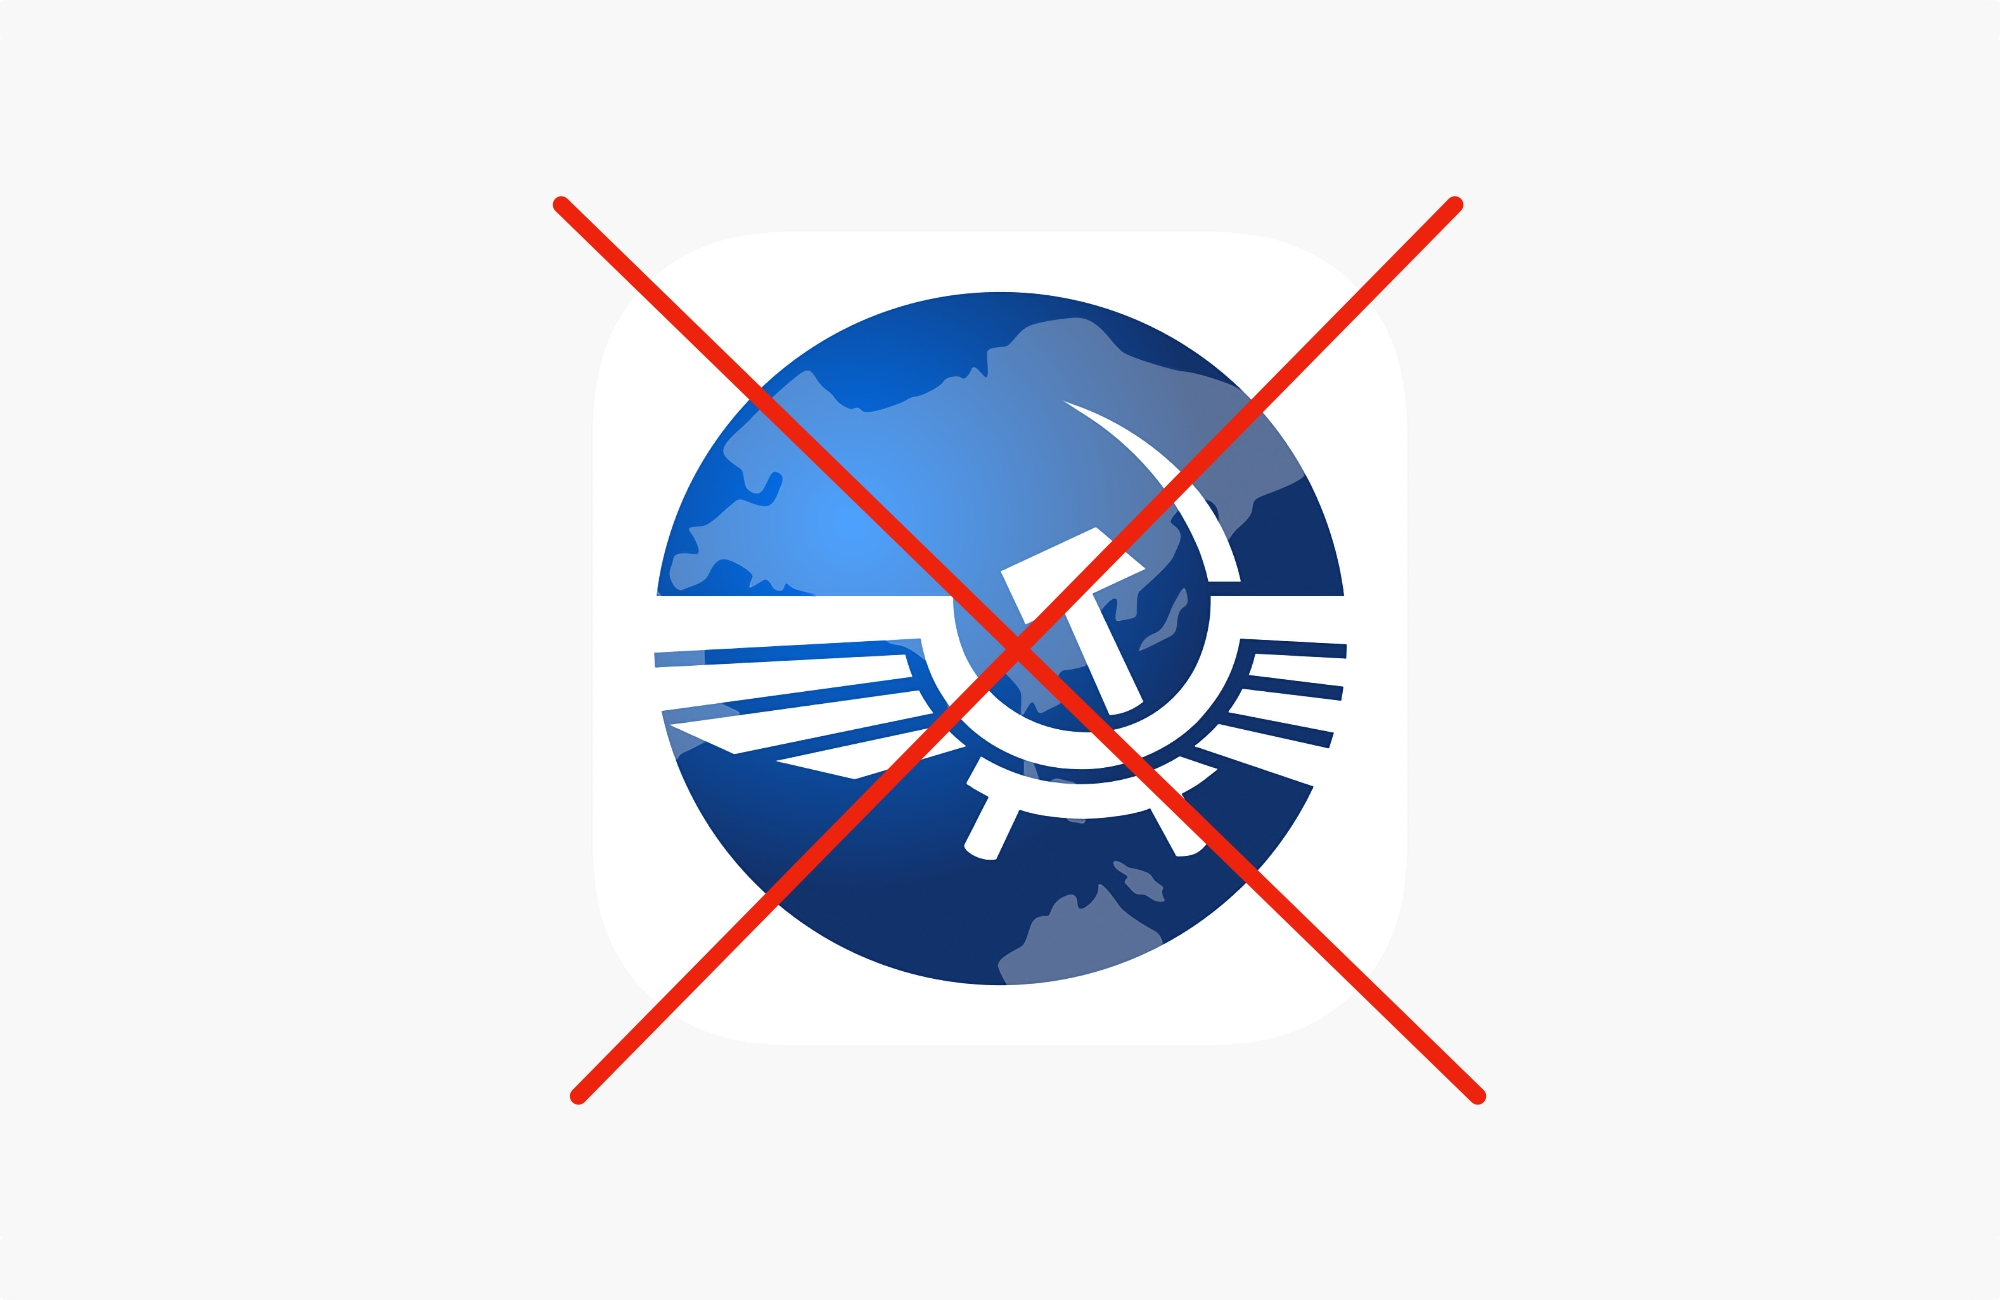 Apple rimuove le app Aeroflot e Utair dall'App Store